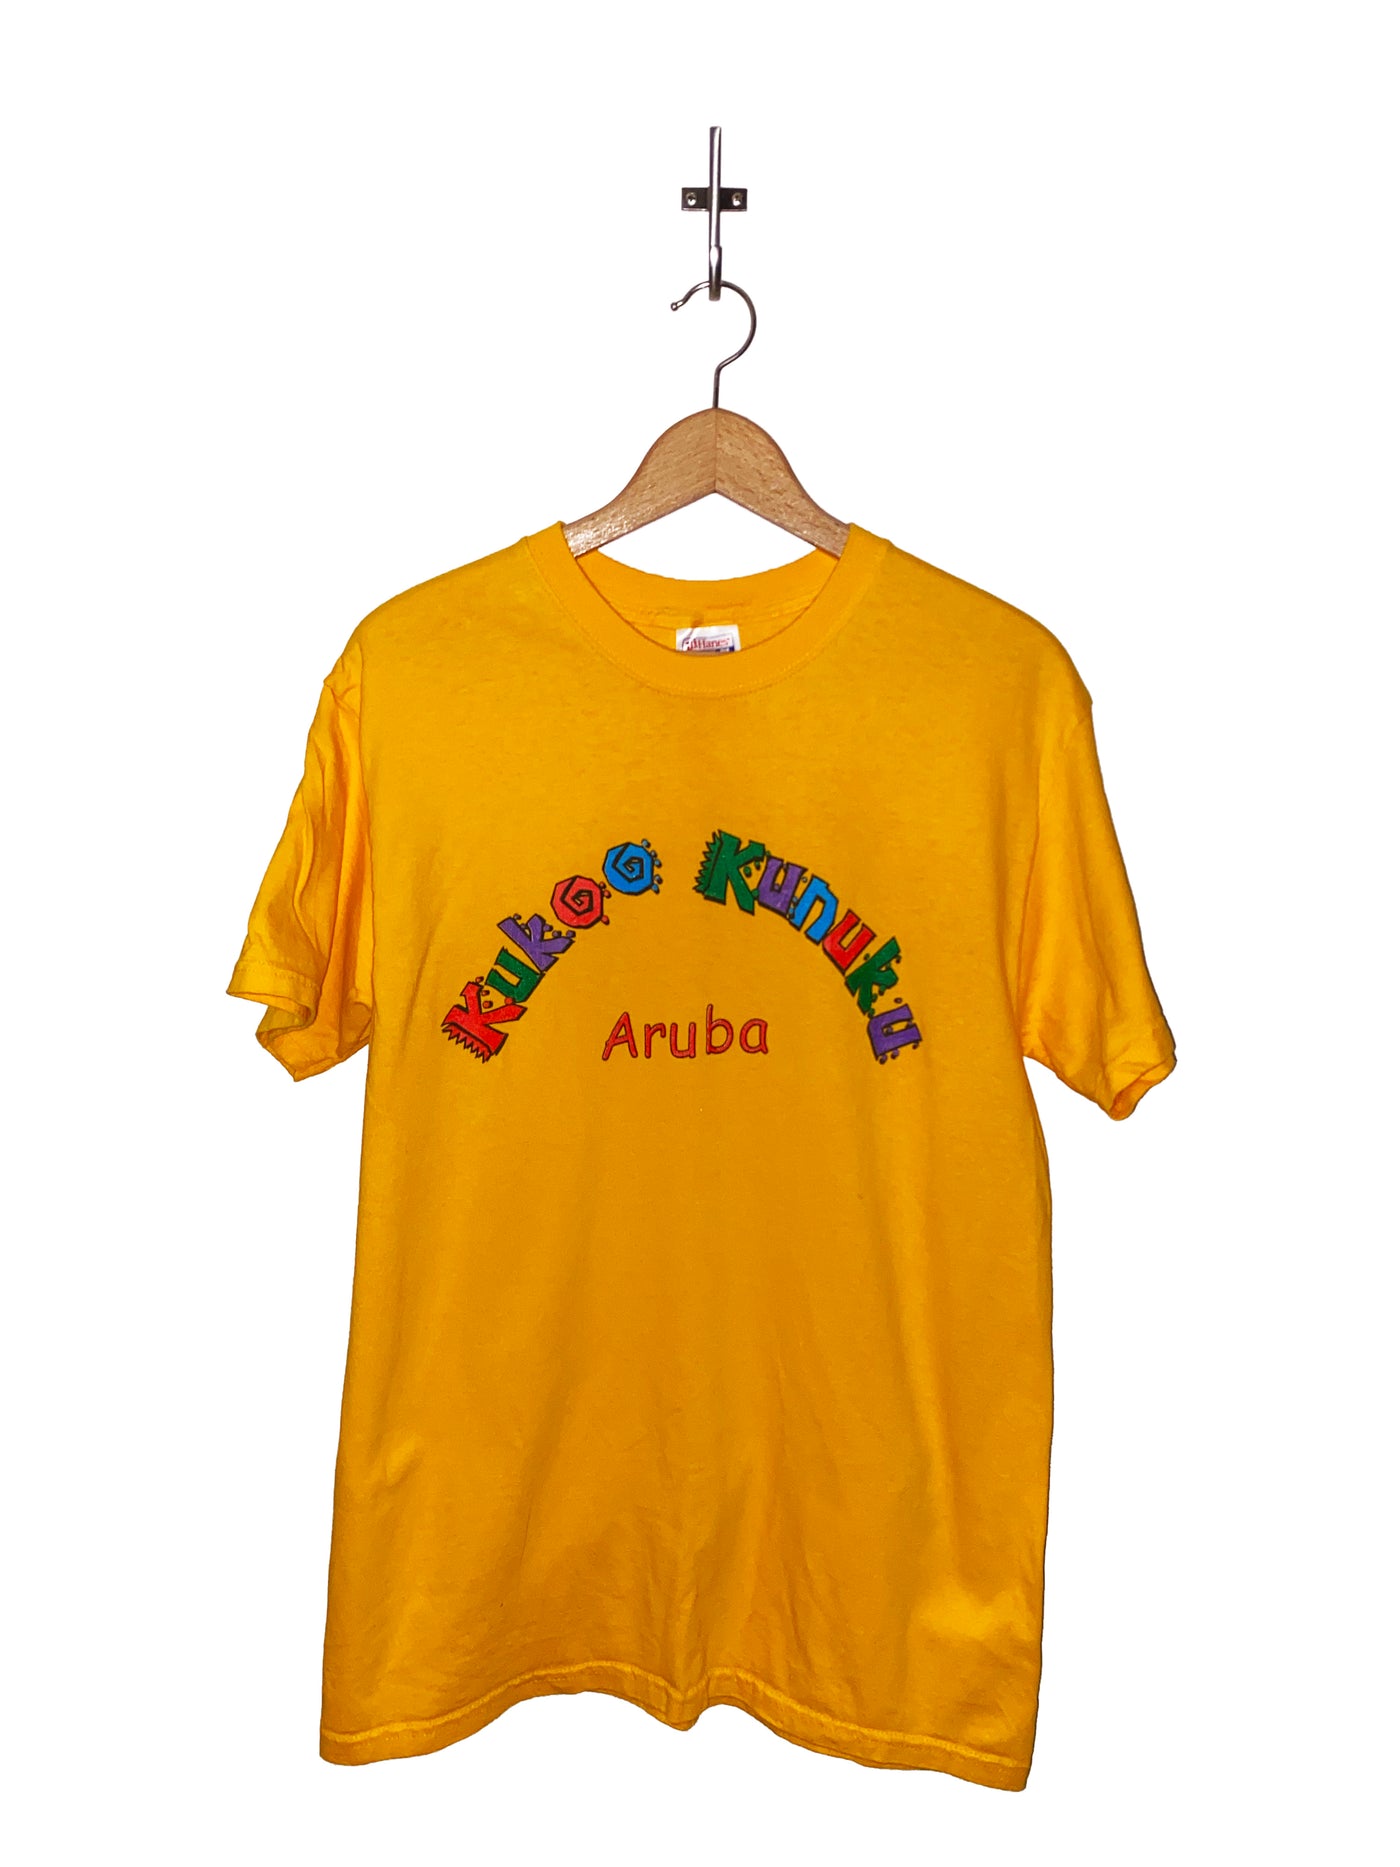 Vintage Aruba T-Shirt